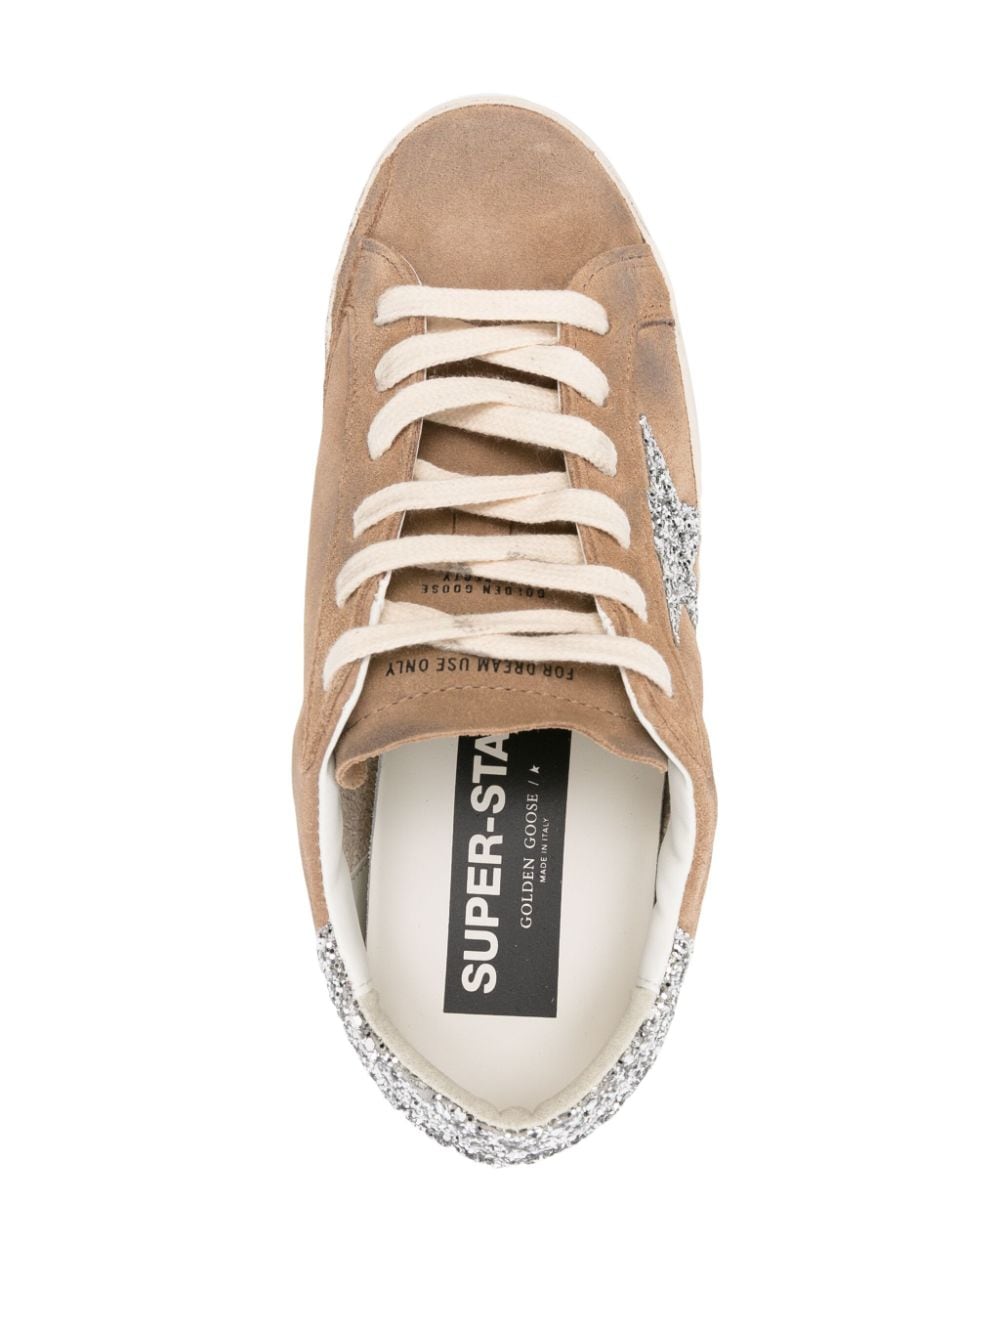 GOLDEN GOOSE Silver Superstar Sneakers for Women